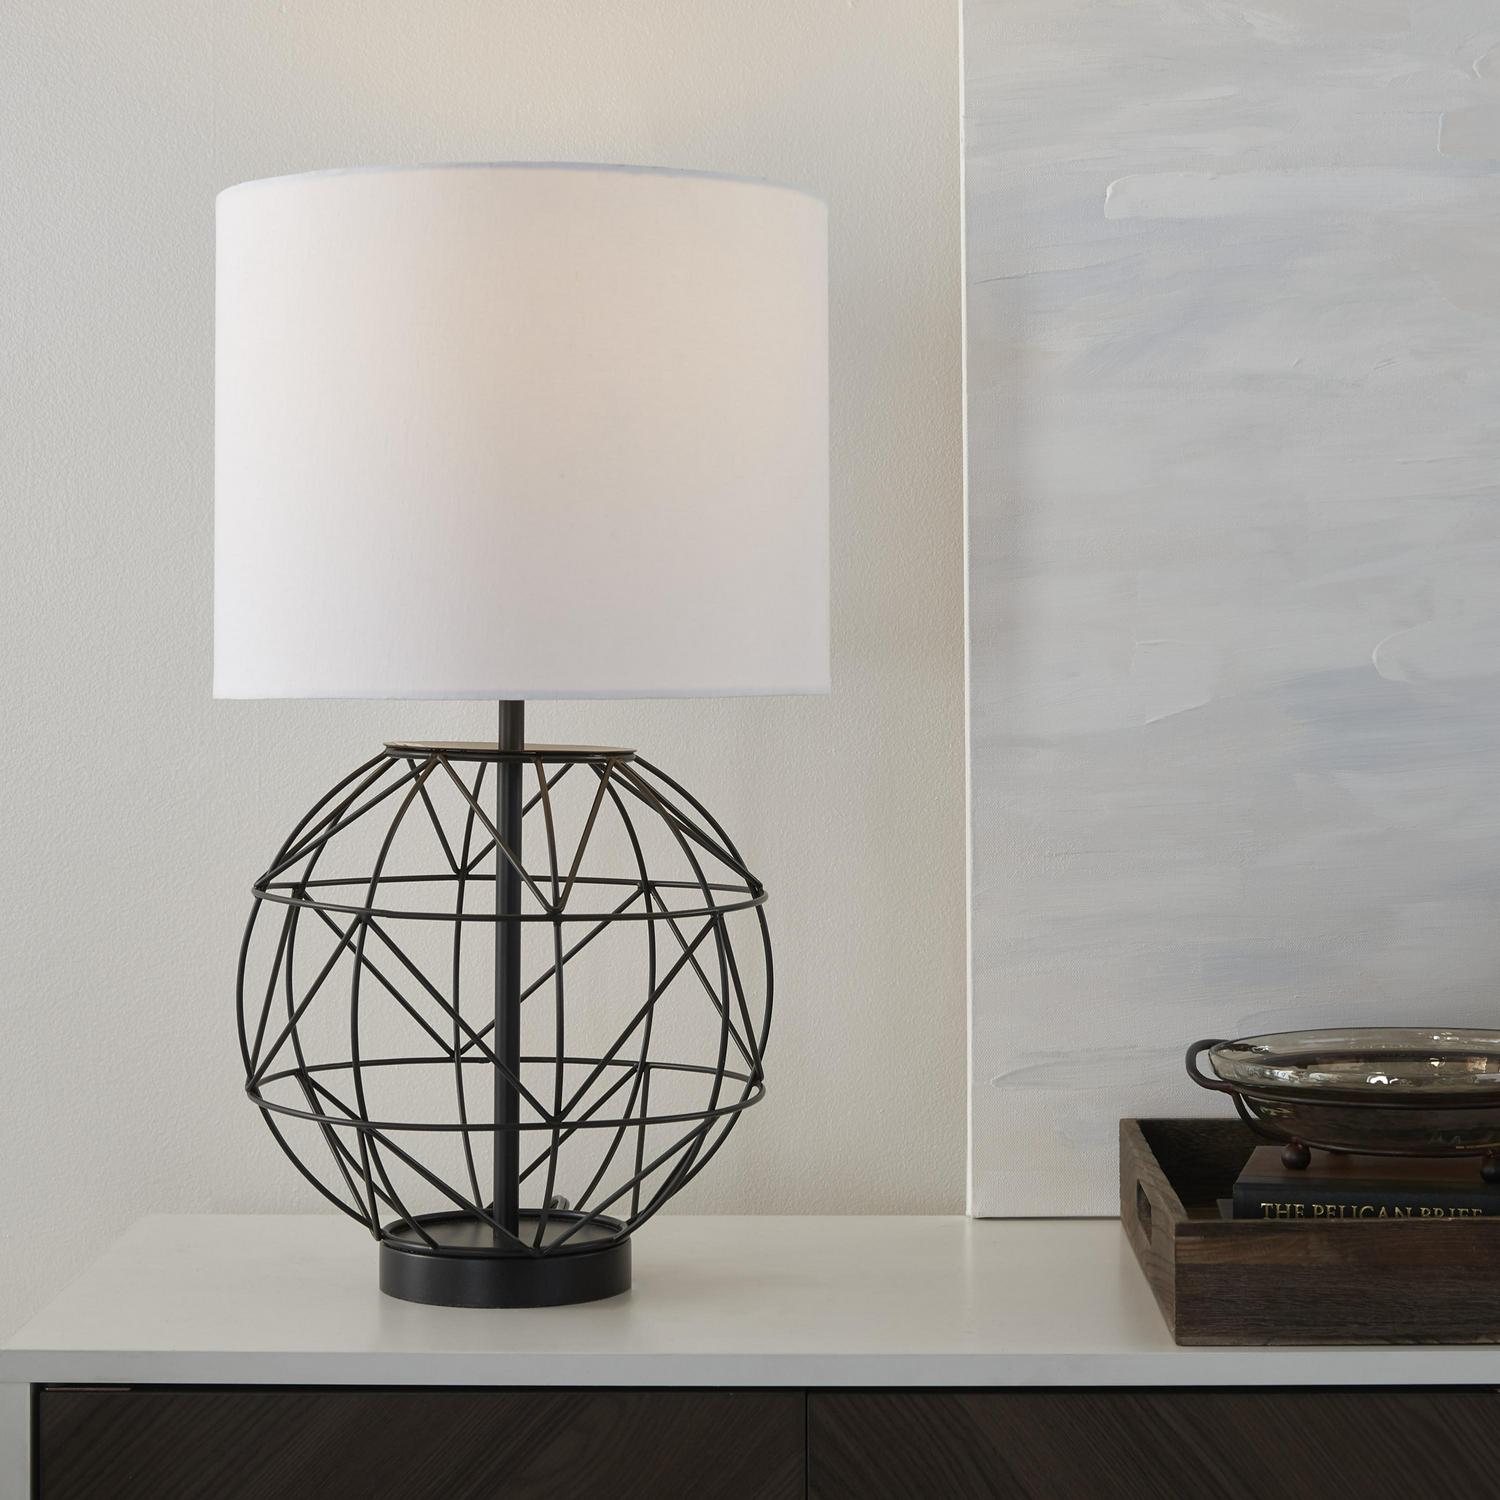 Nourison 22 Metal Globe Table Lamp， Modern， Industrial， Transitional for Bedroom， Living Room， Dining Room， Black